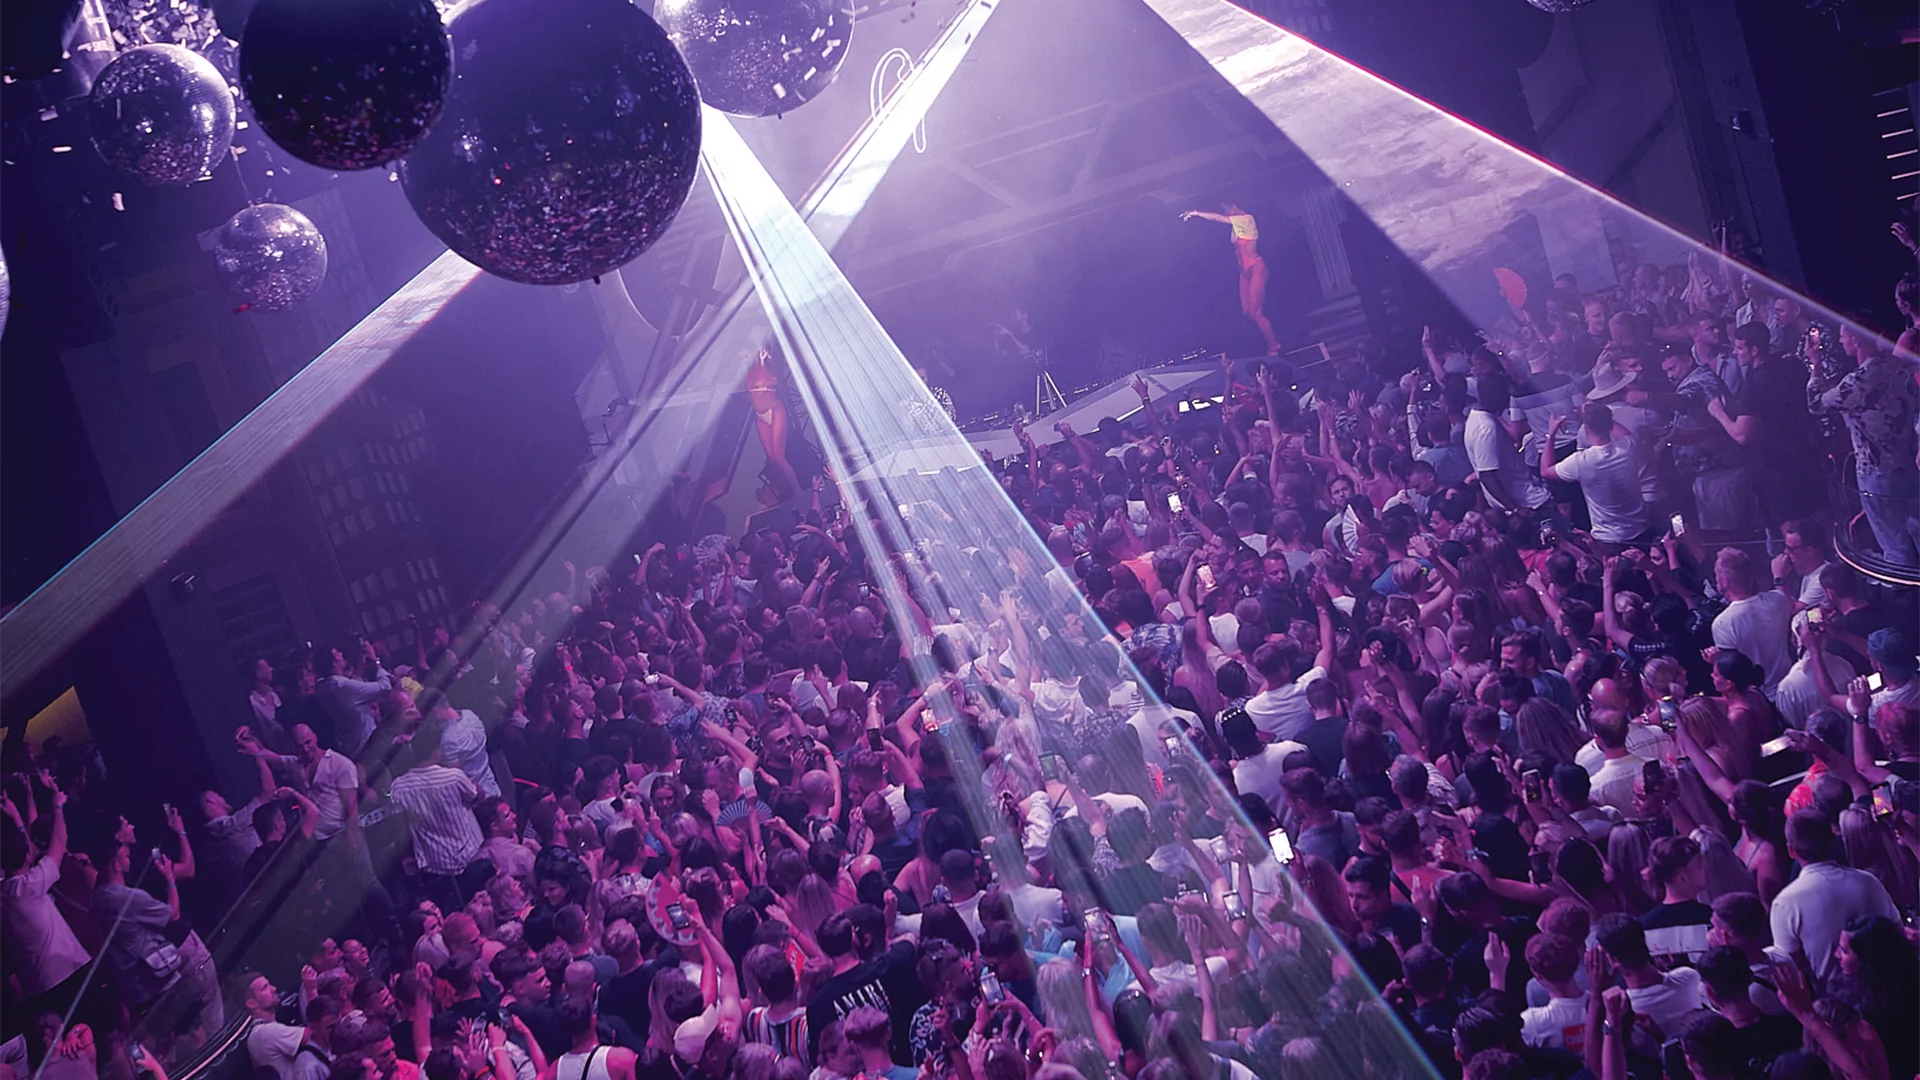 Ariel shot of a crowded nightclub under a purple light, with Purple Disco Machine behind the decks